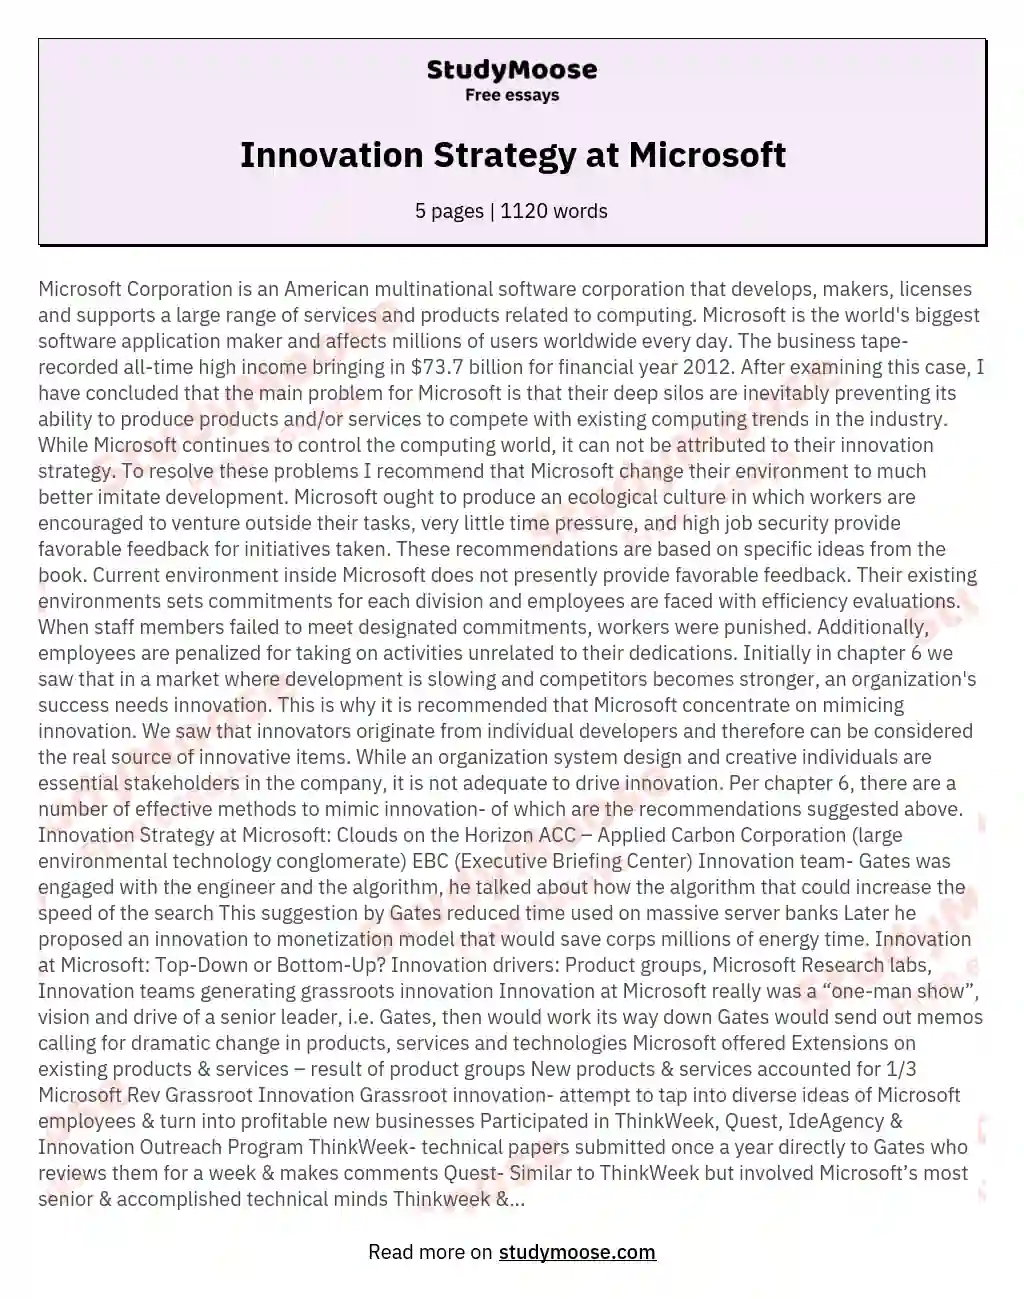 Innovation Strategy at Microsoft essay